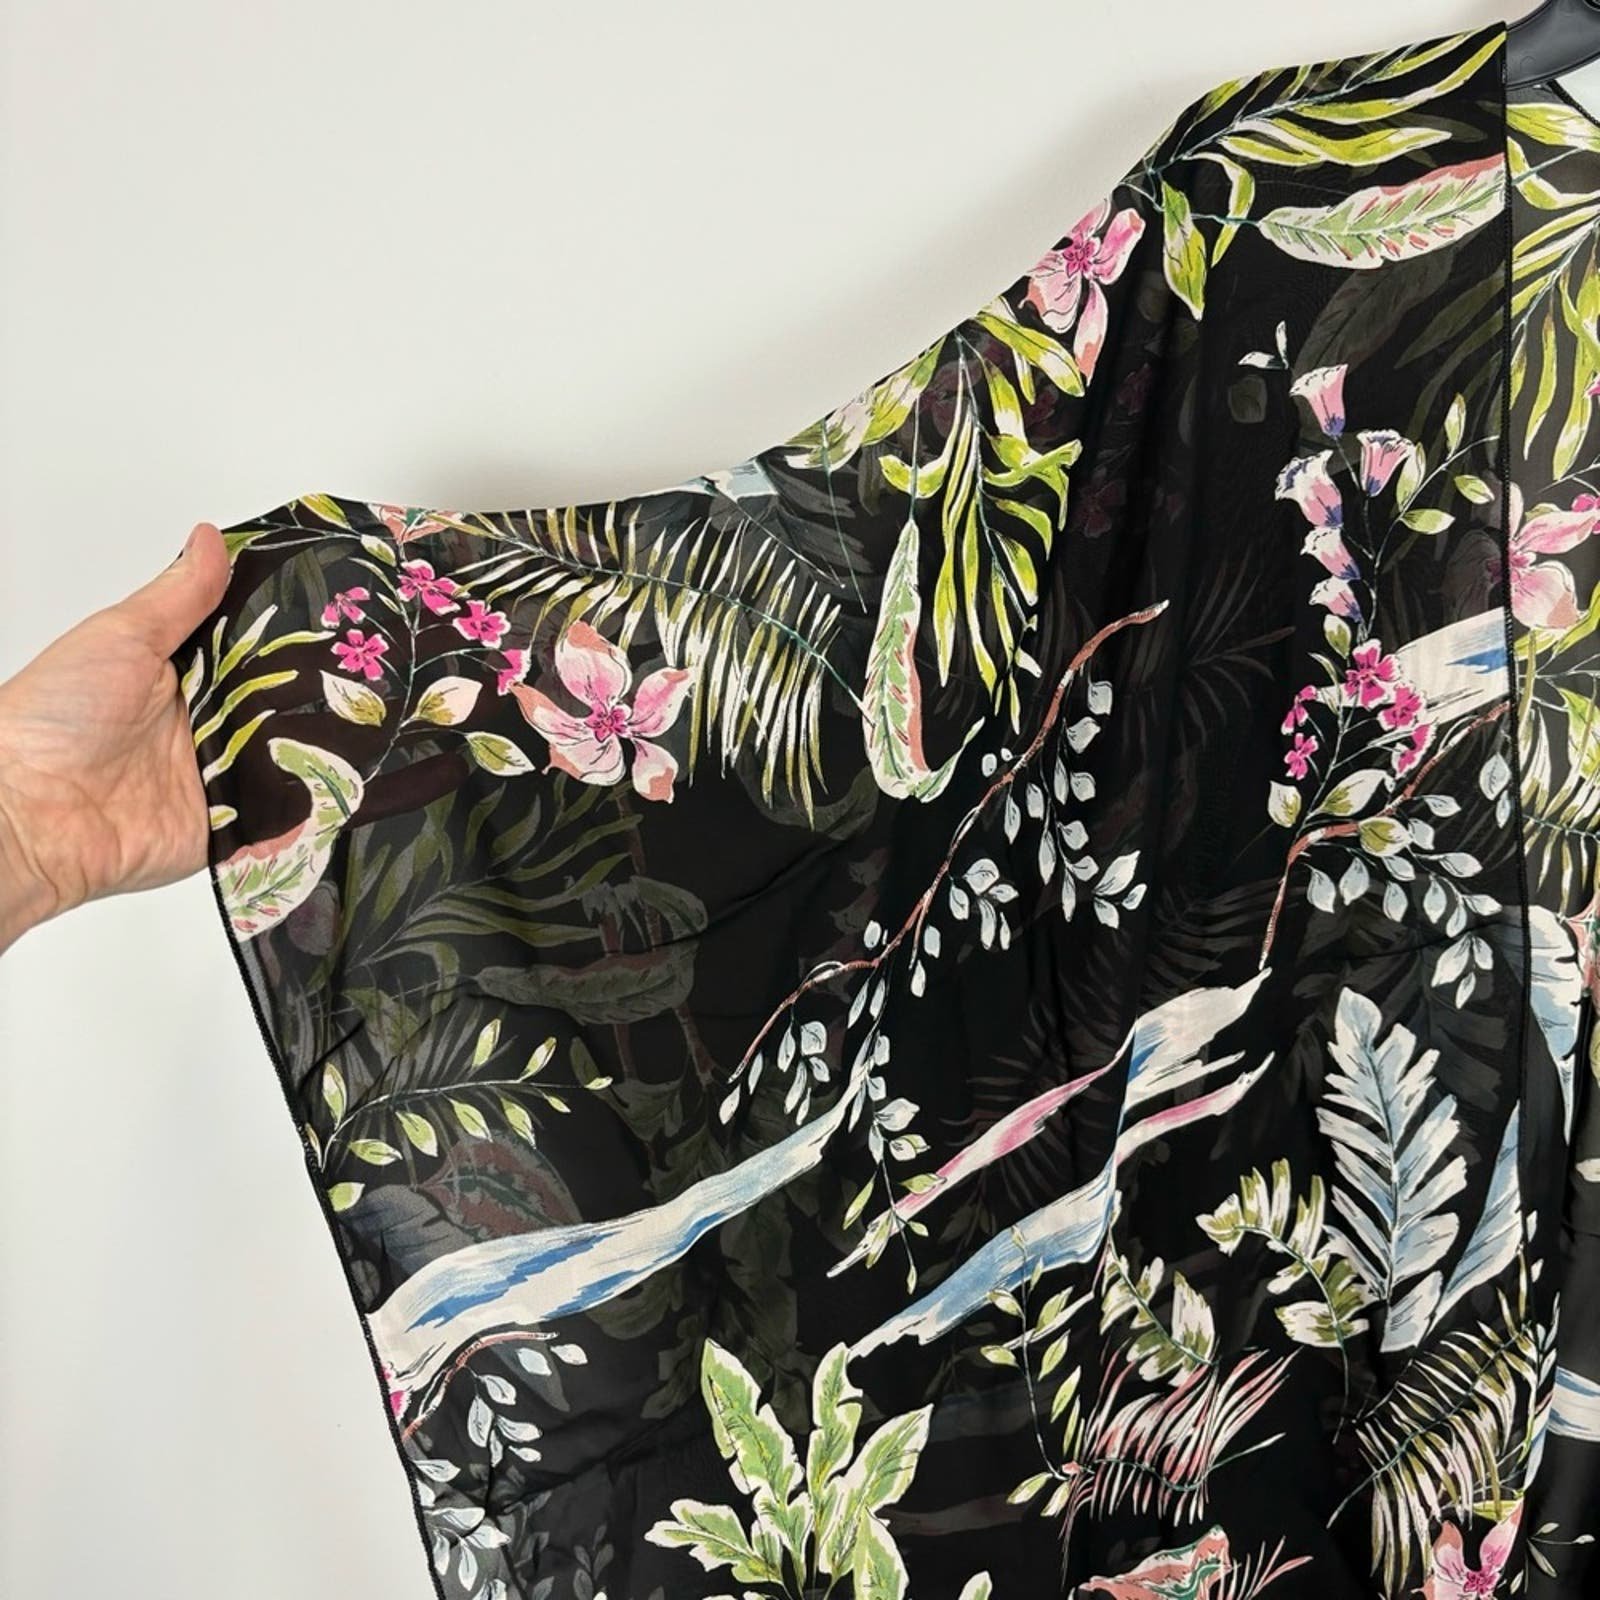 The Best Seller Karen Kane Floral Open Front Kimono Size M/L ORc4RjQKj High Quaity